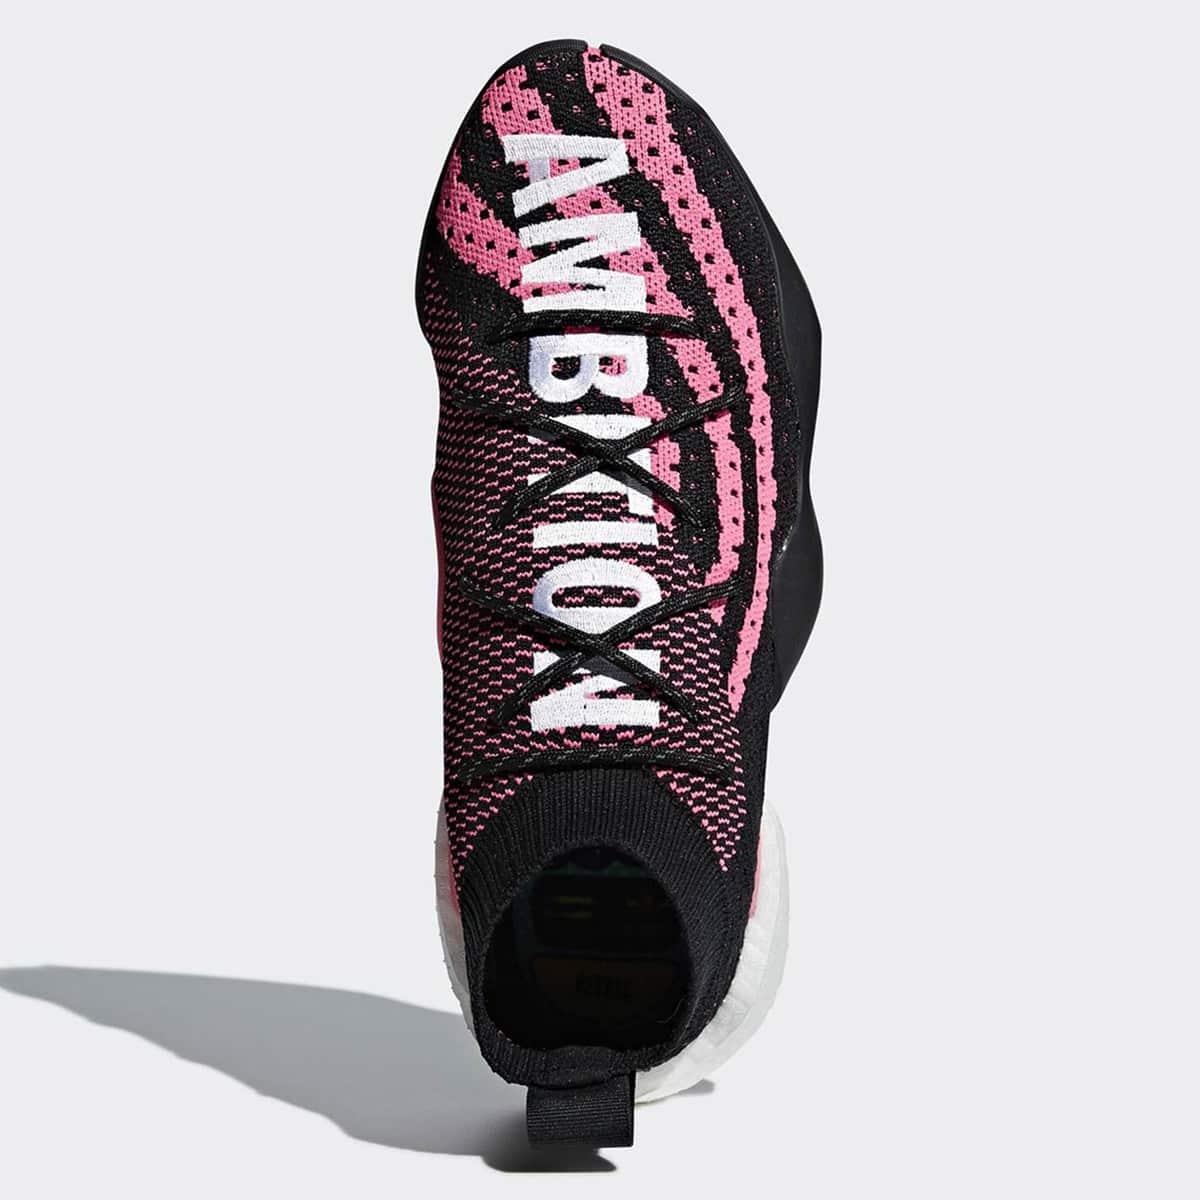 Pharrell Williams x adidas Originals Crazy BYW LVL X PW, Pink/Black, G28182-2